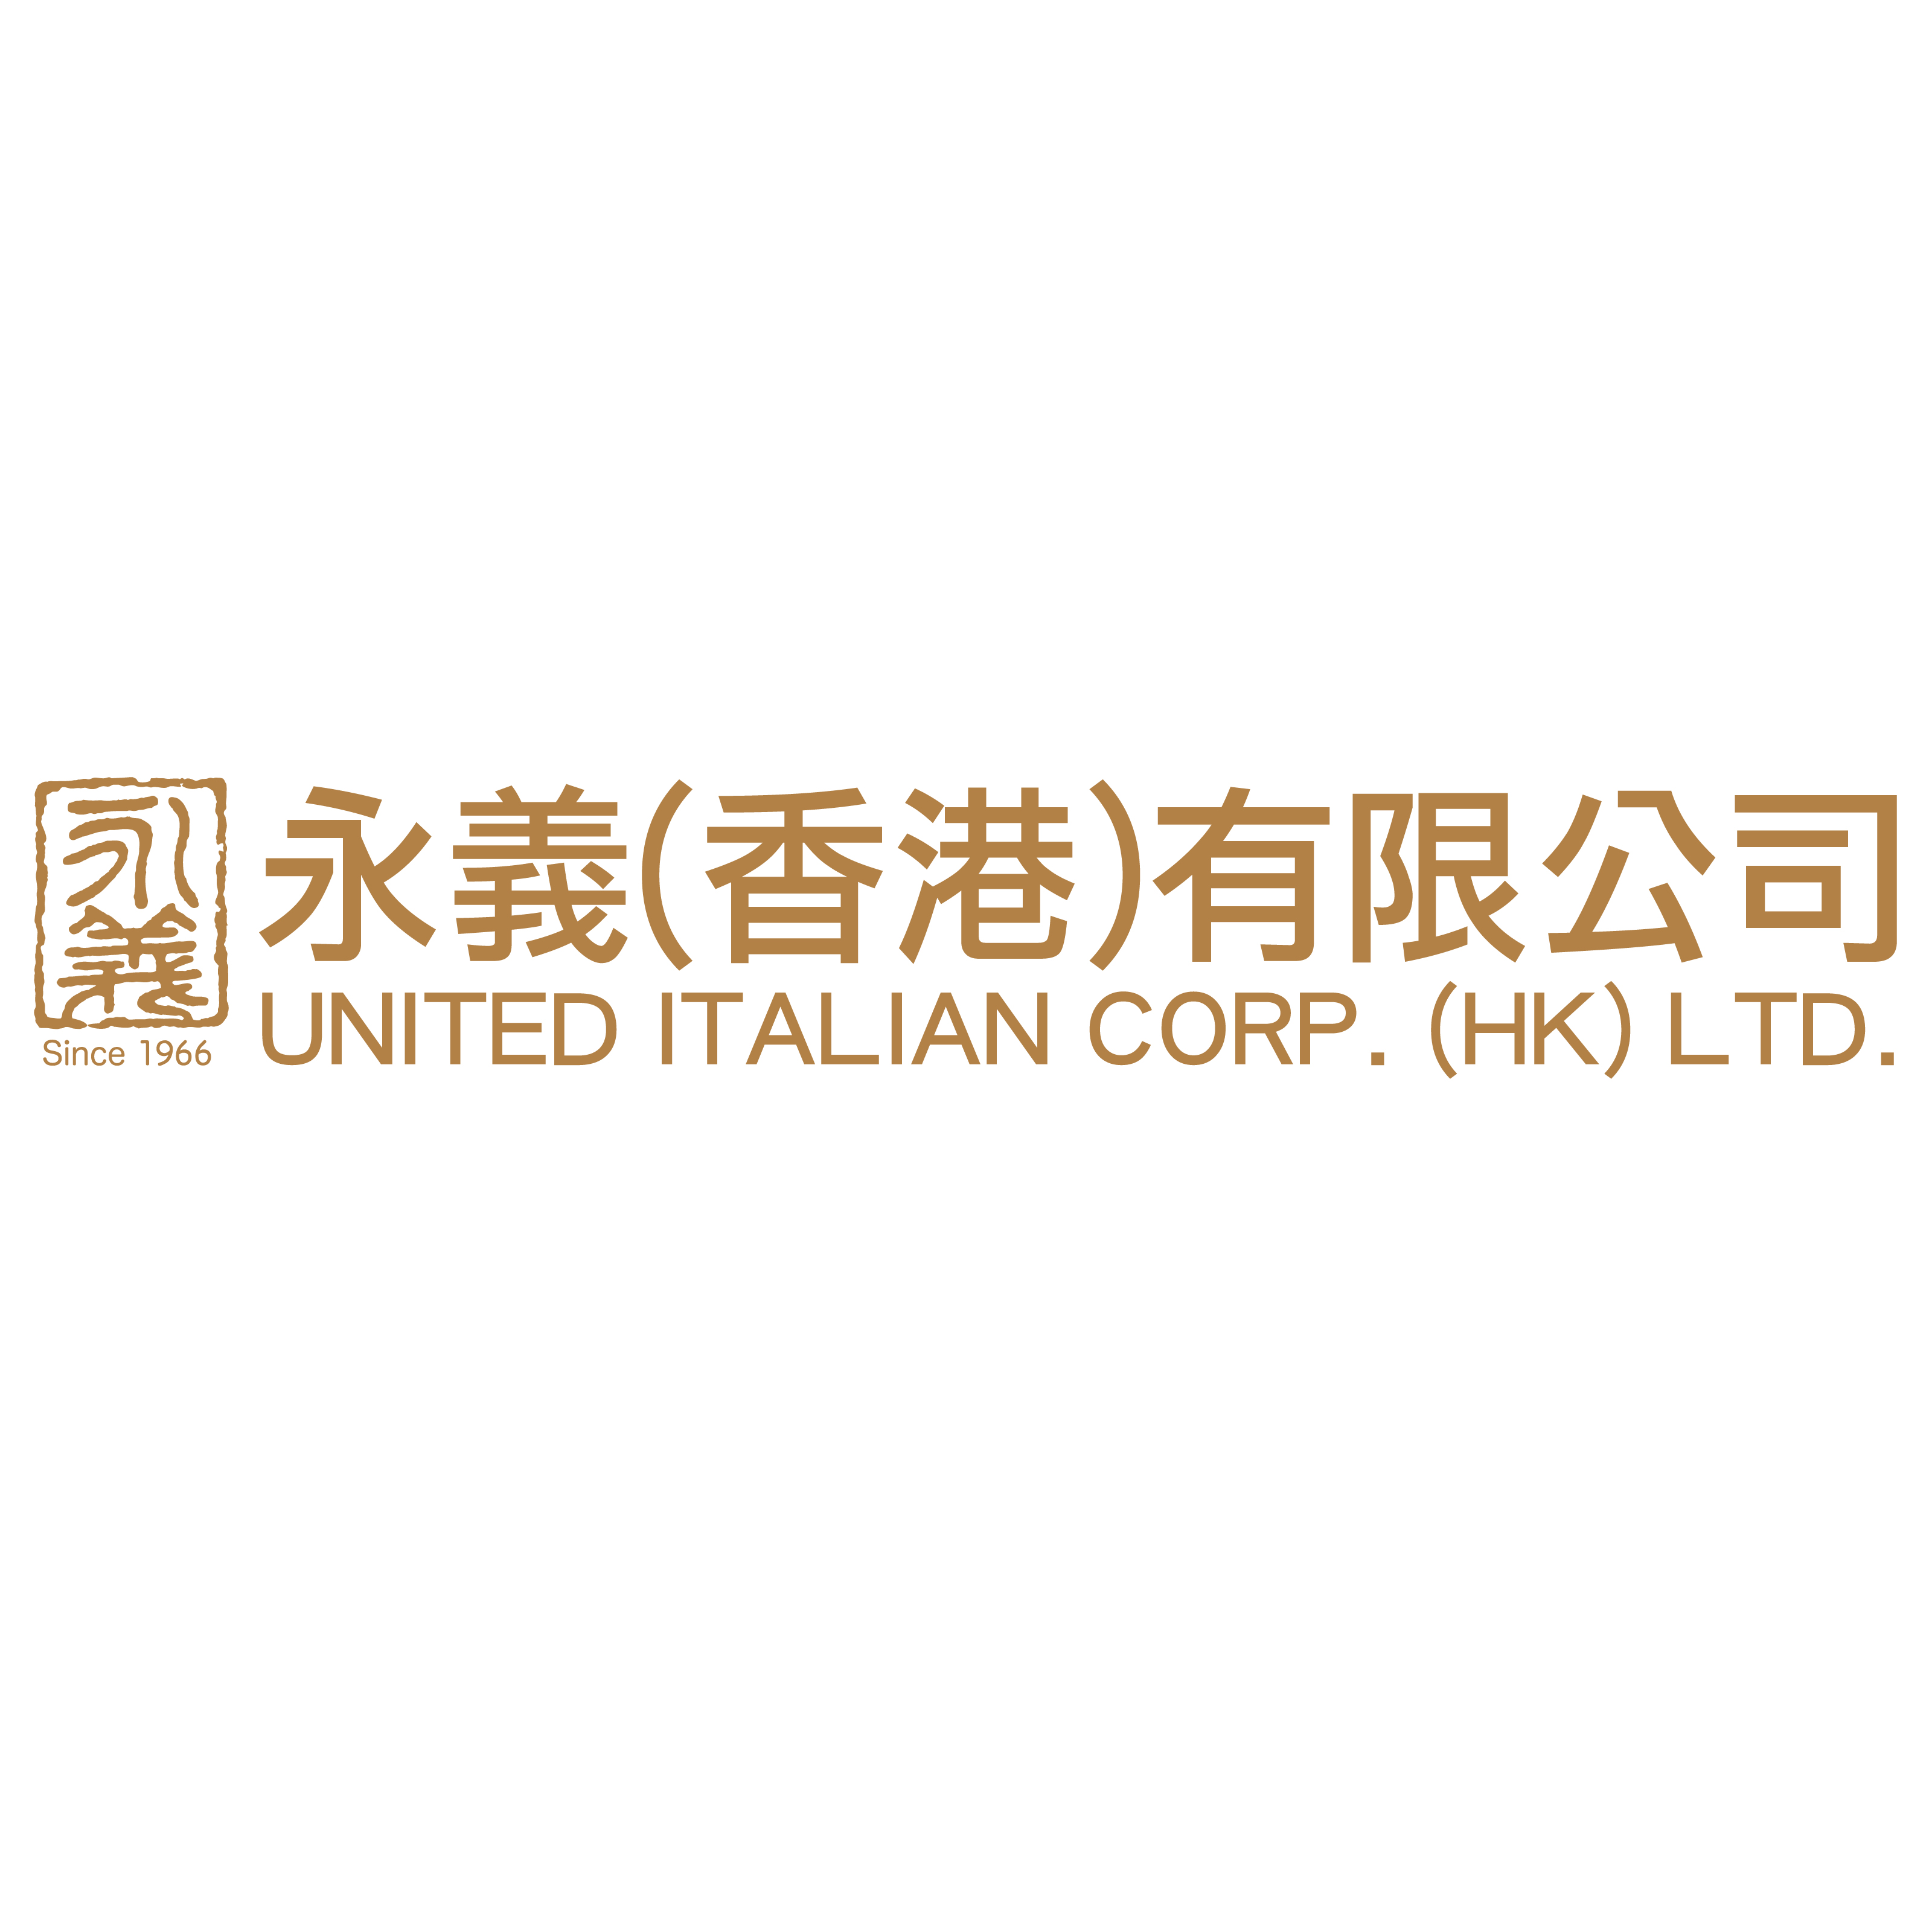 United Italian Corp. (HK) Ltd